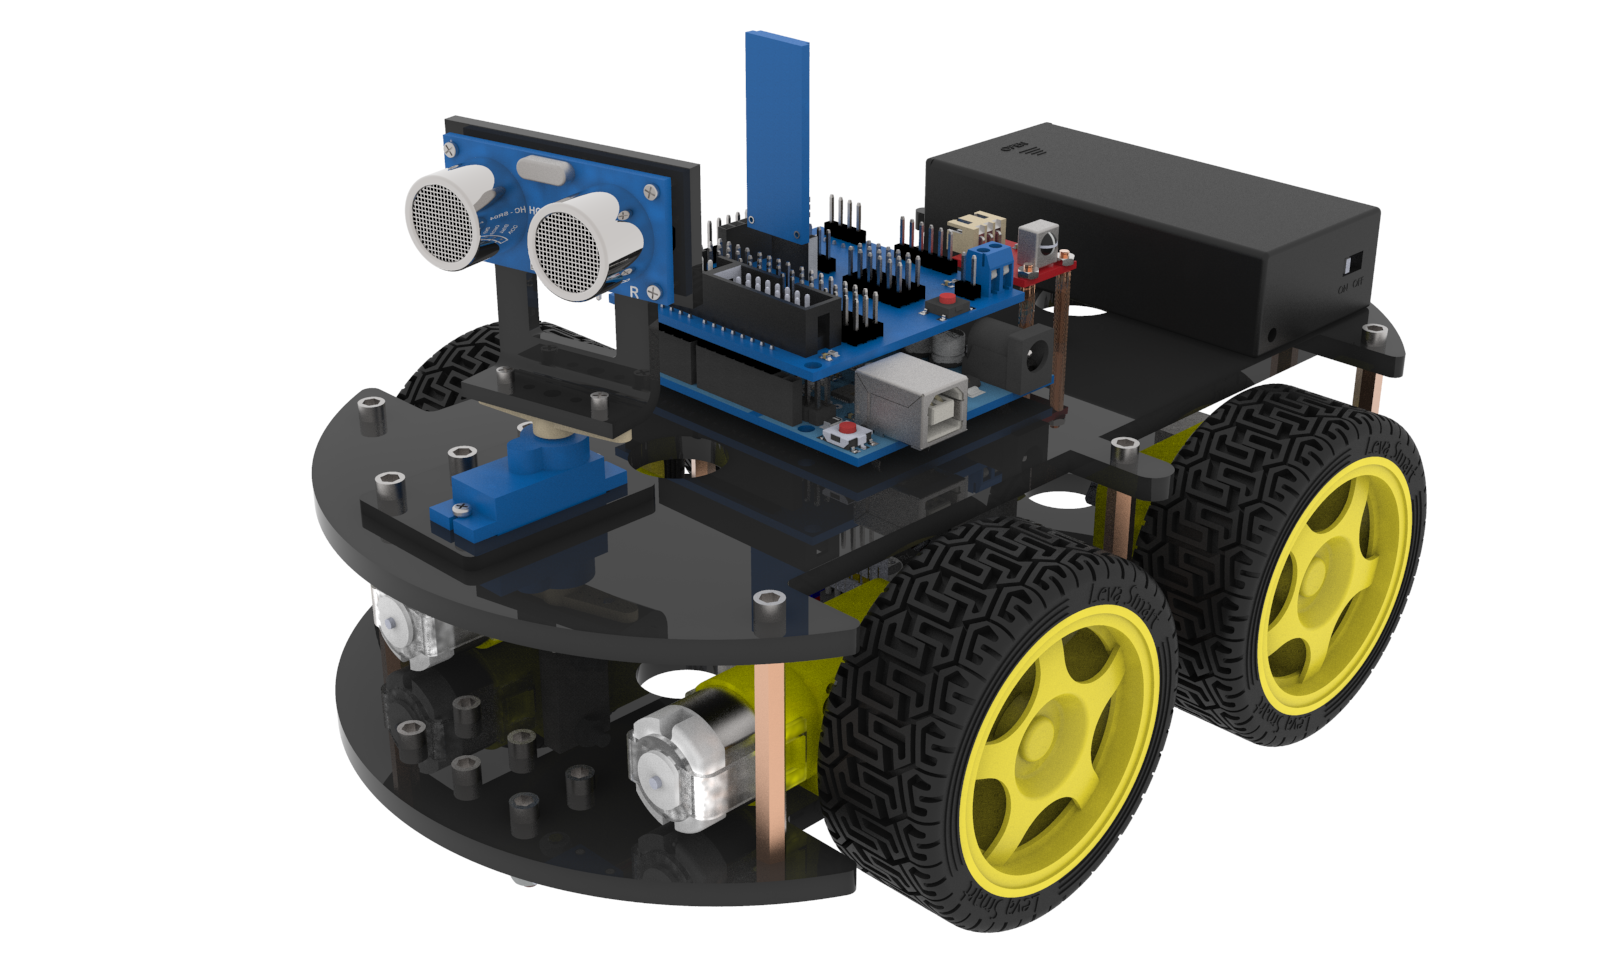 TP voiture - robot : Elegoo Smart Robot Car - éduscol STI